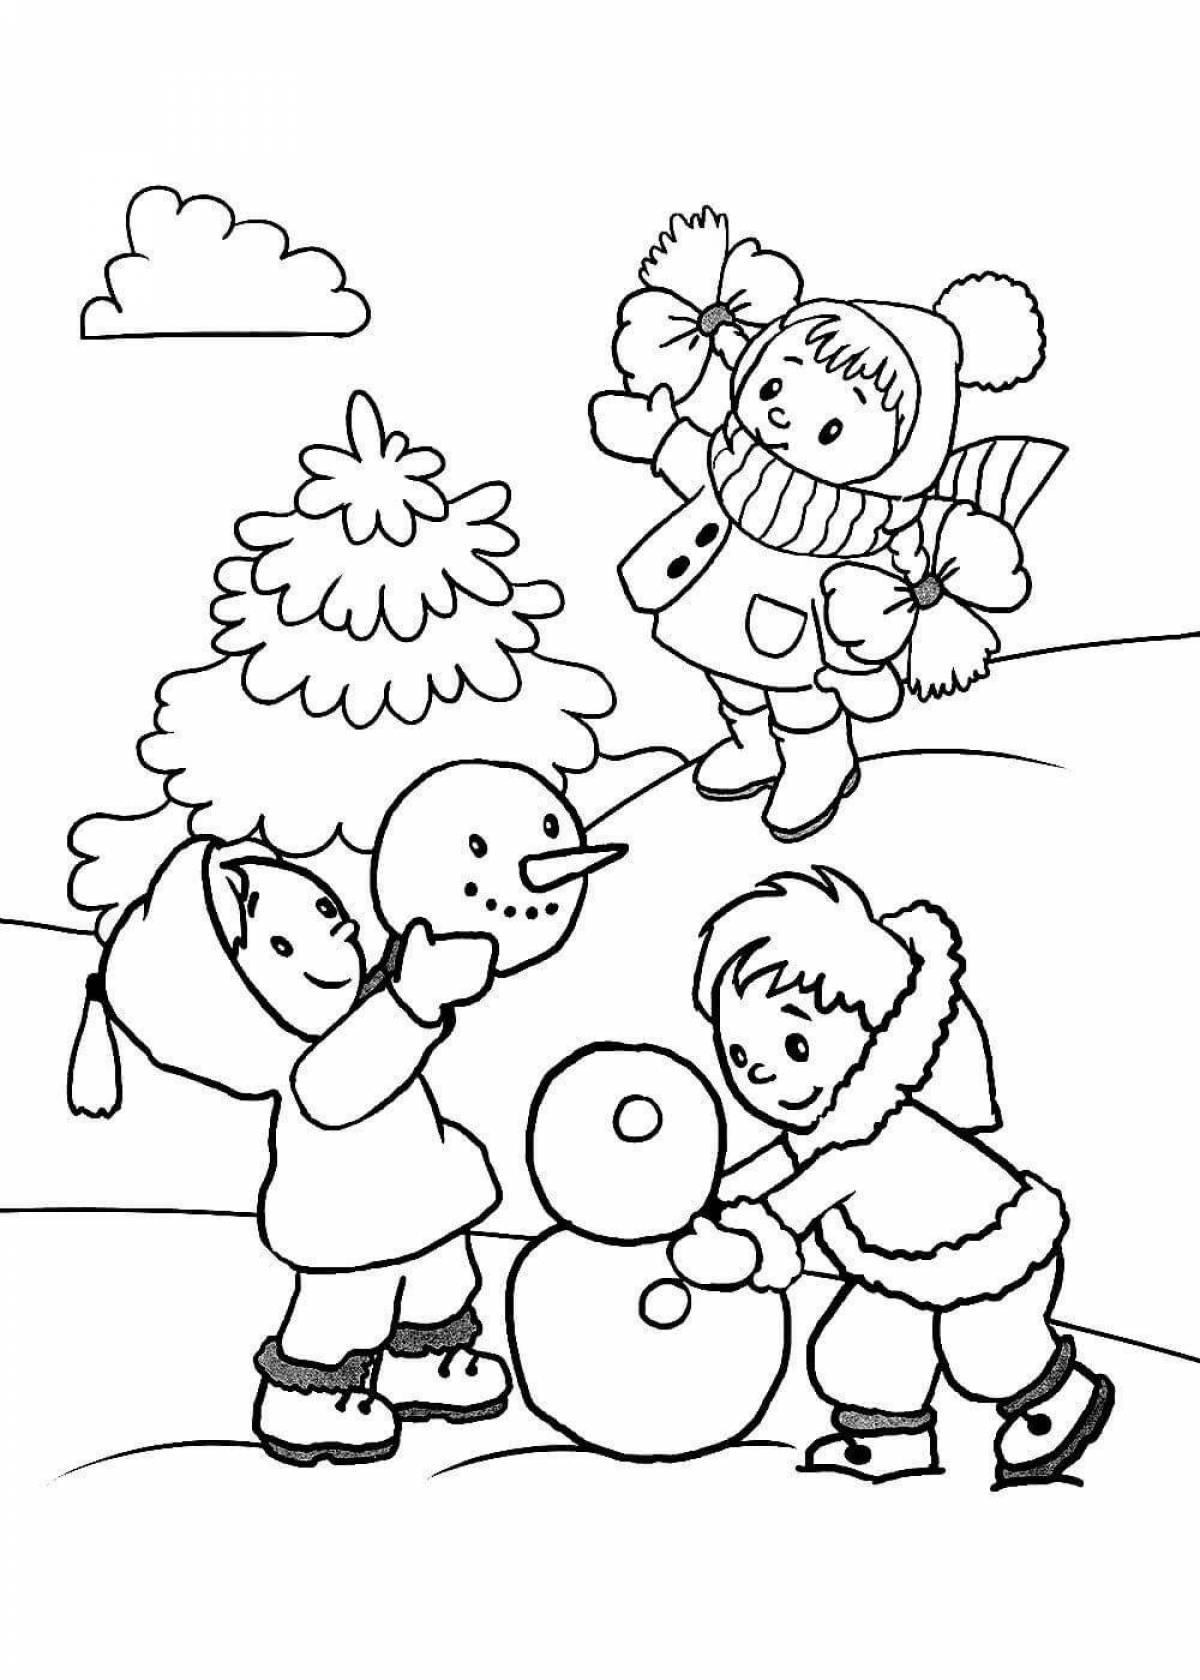 Magic winter coloring book for kids